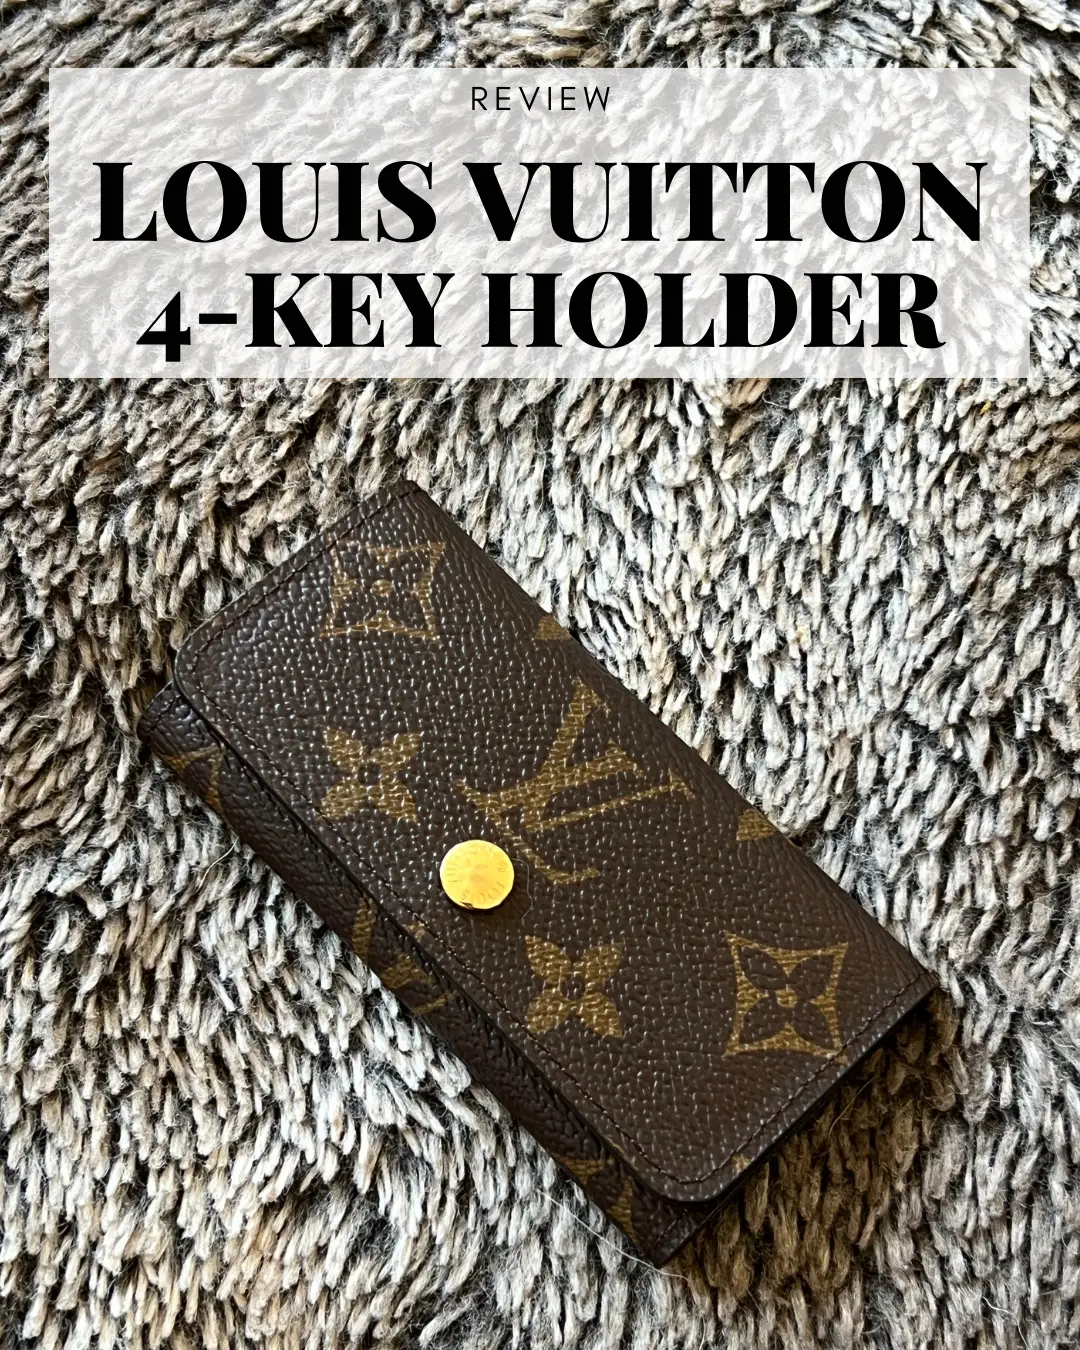 LOUIS VUITTON Monogram 4 Key Holder - More Than You Can Imagine